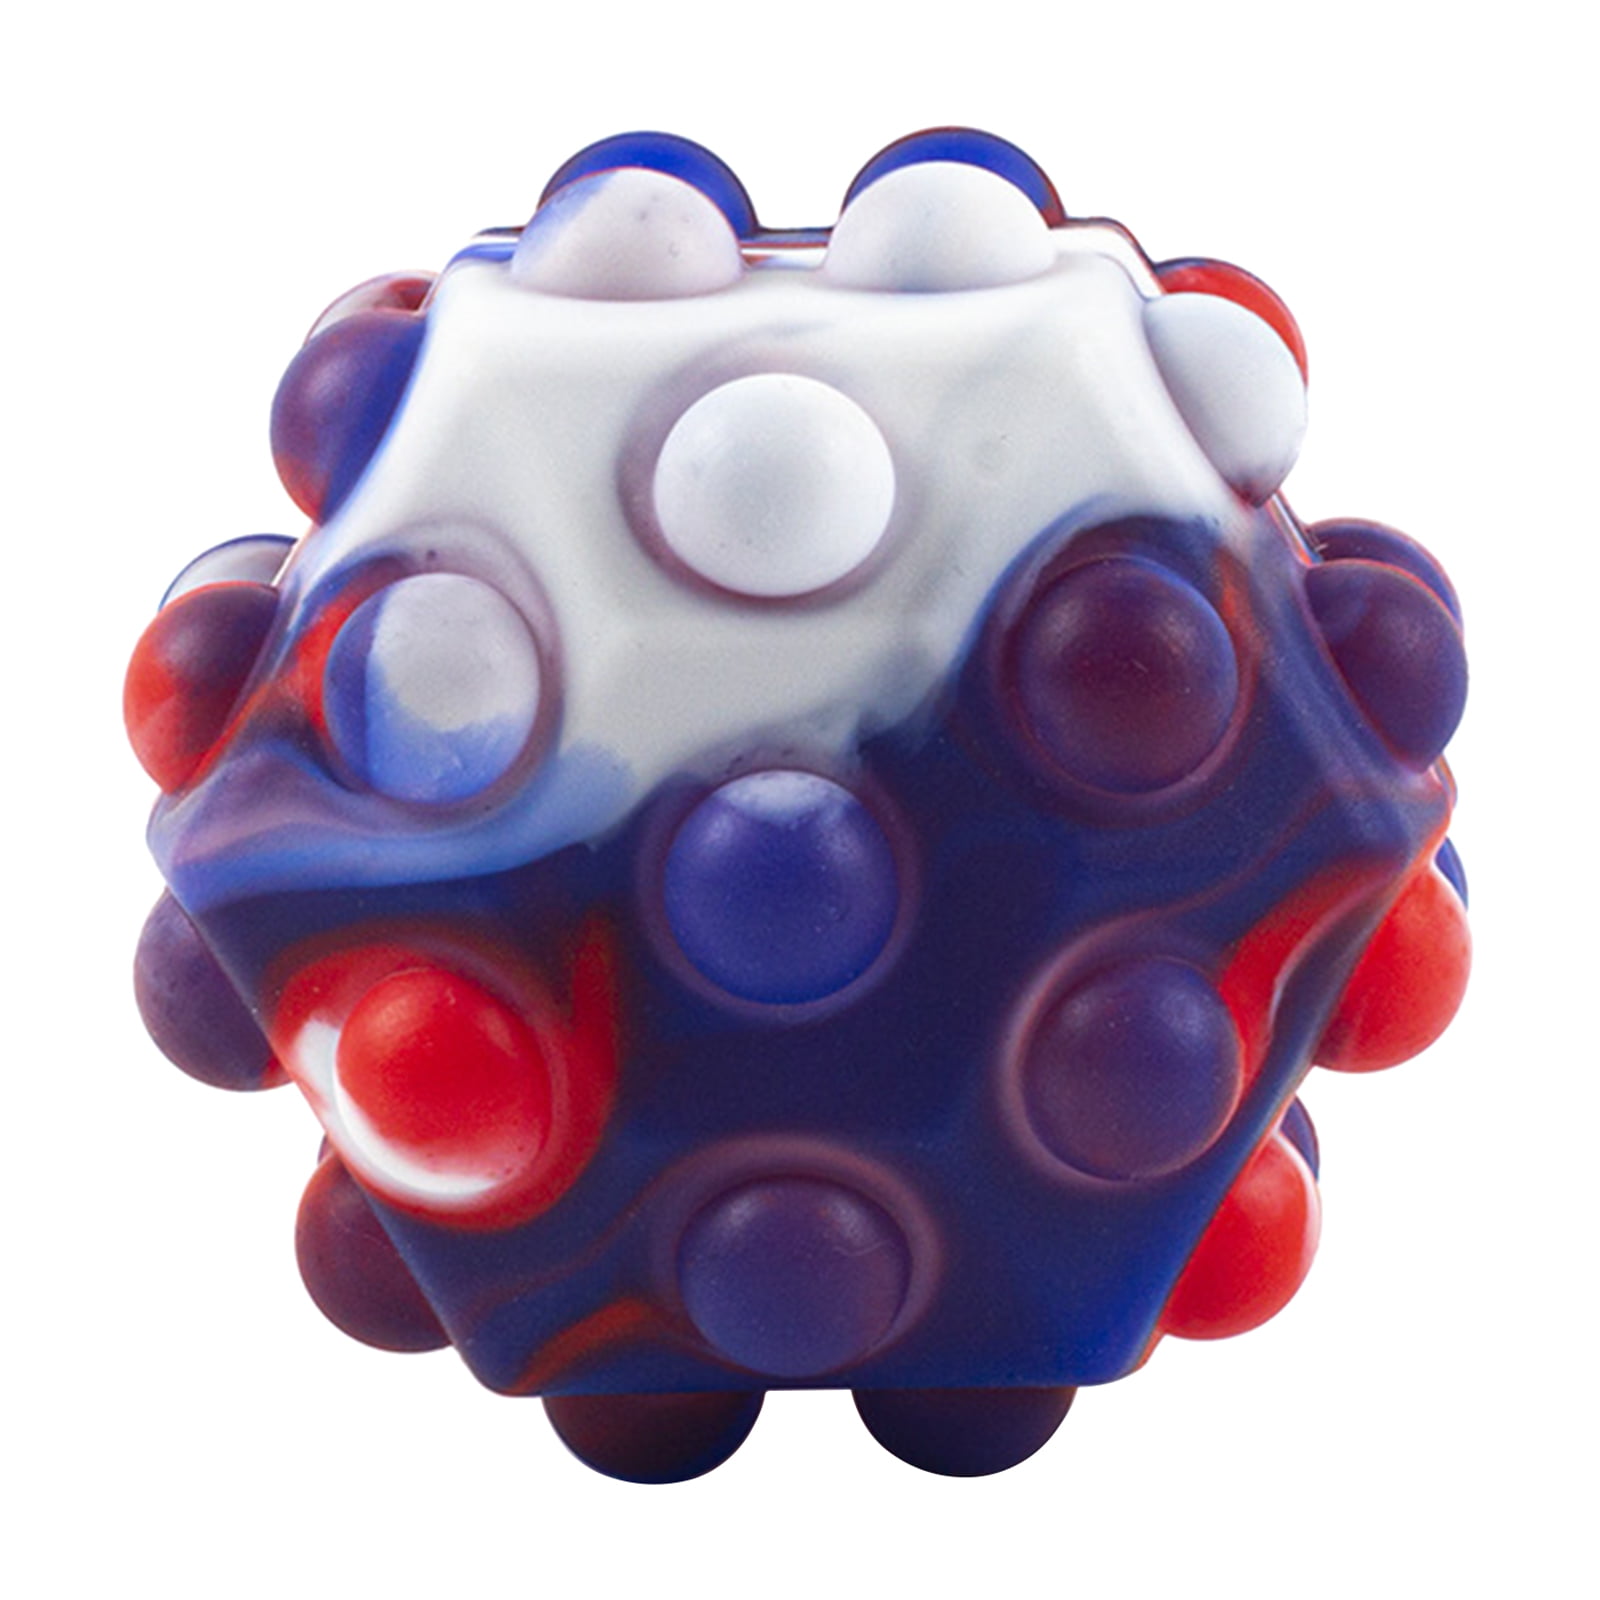 3D Ball Push Bubble Fidget Toy Early Education Brain Development Toy Harmless 